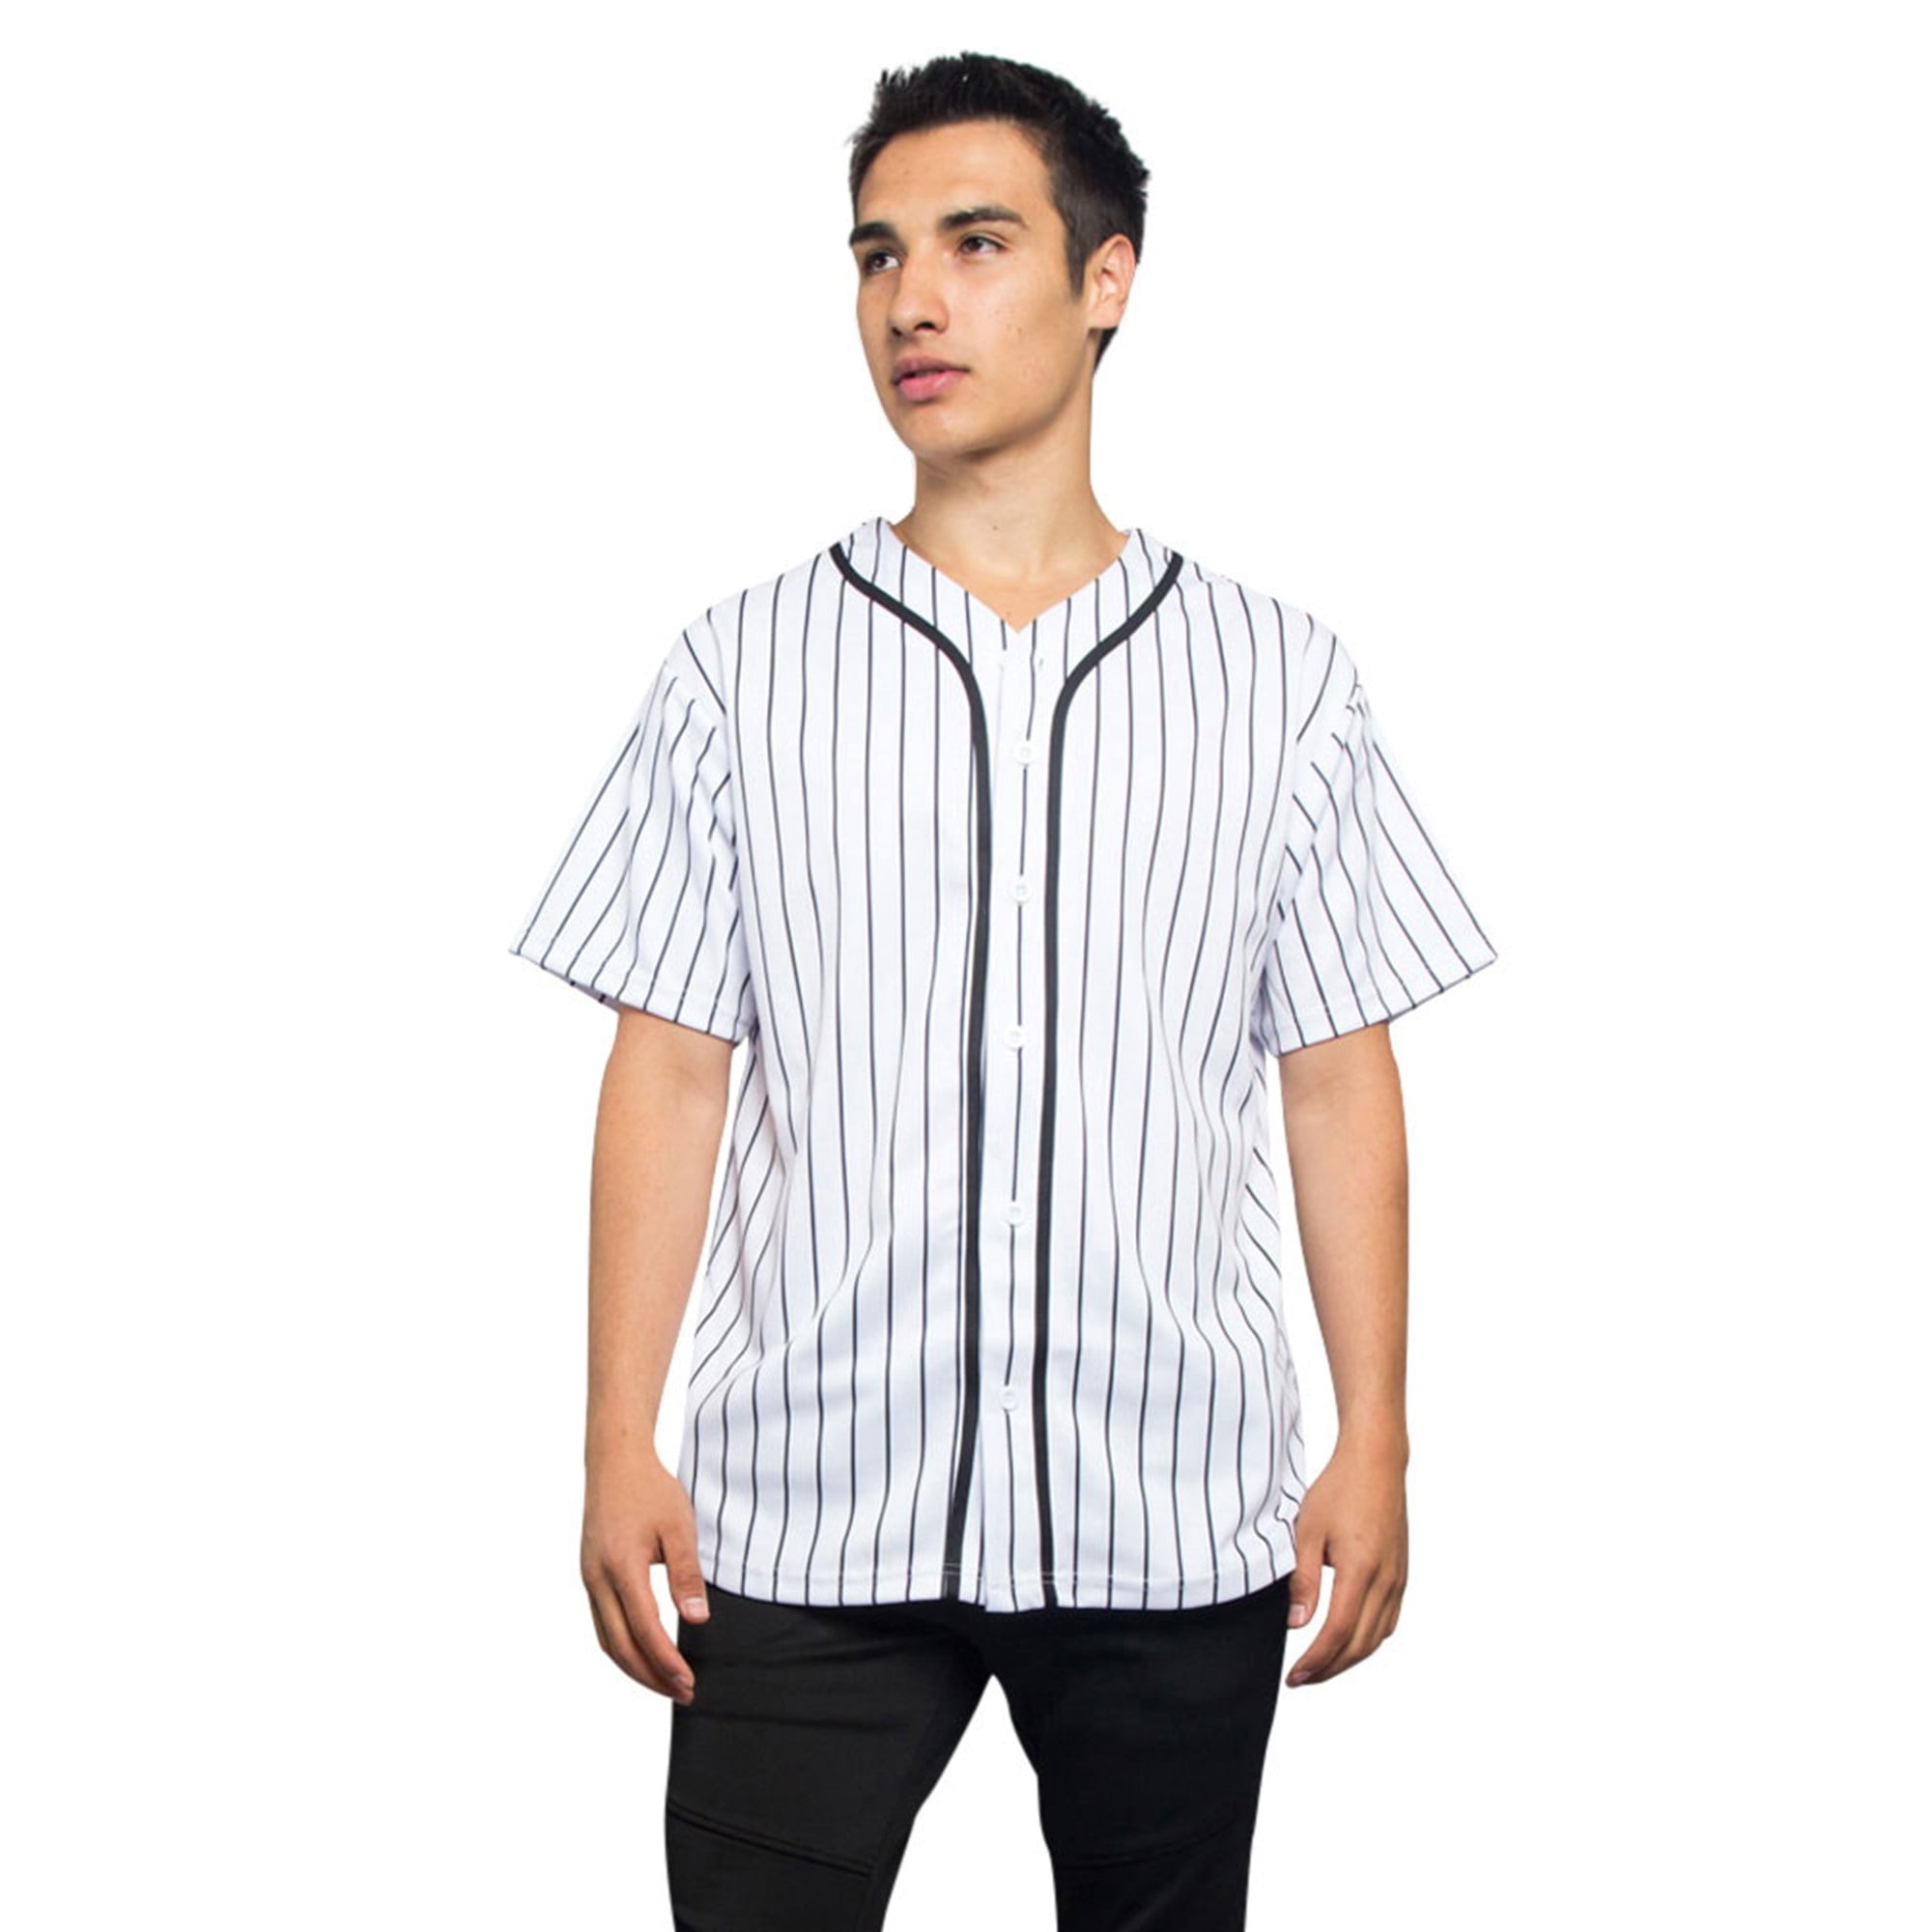 Men's Hipster Hip Hop Button Down Pin Striped Baseball Jersey Short Sleeve  Shirt BJ44 - White - Large 